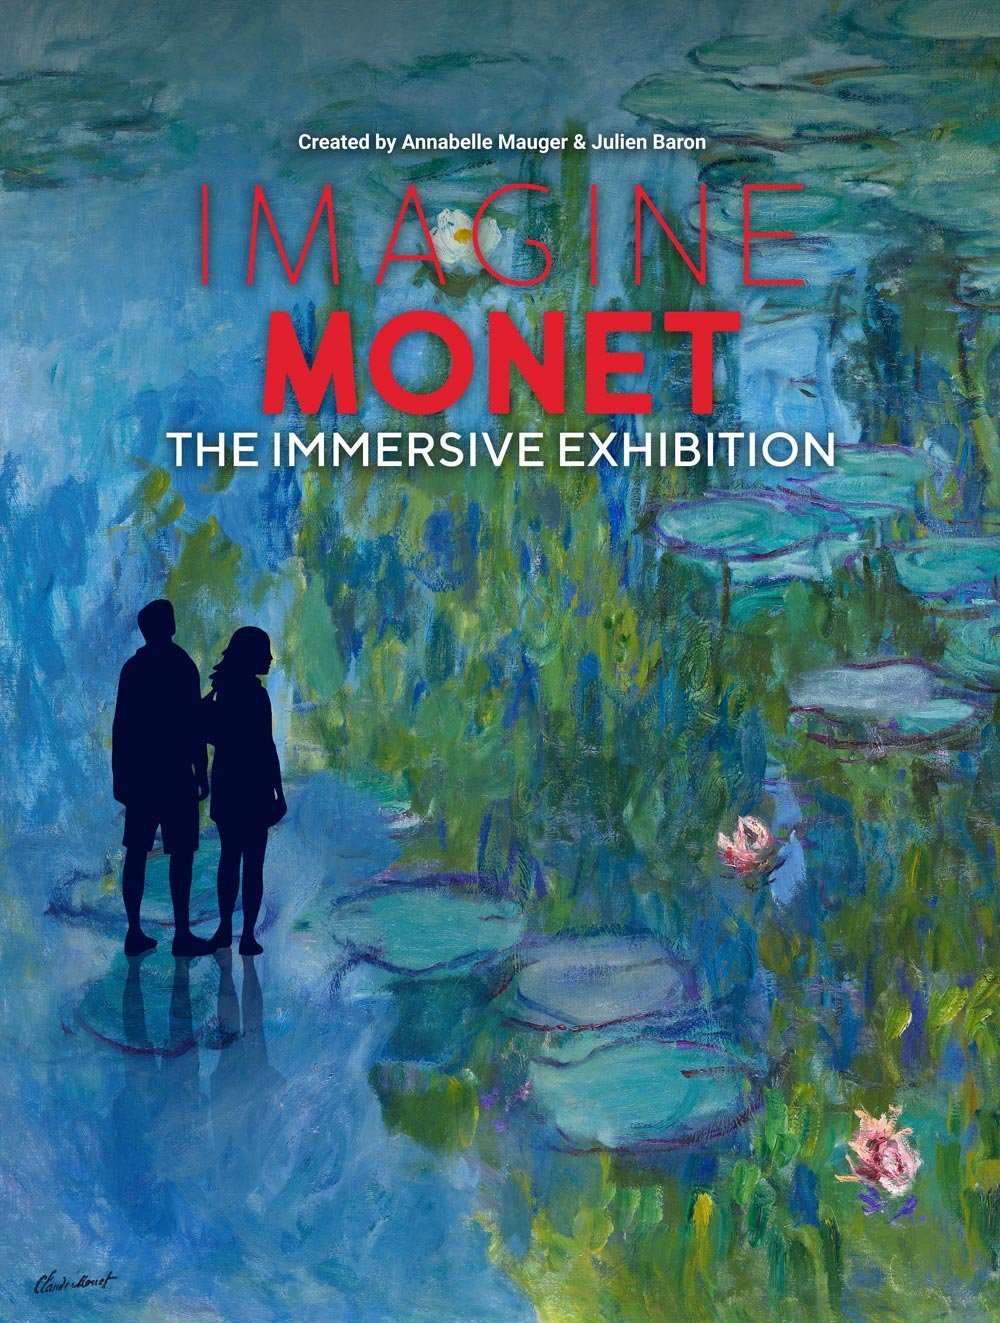 Imagine Monet